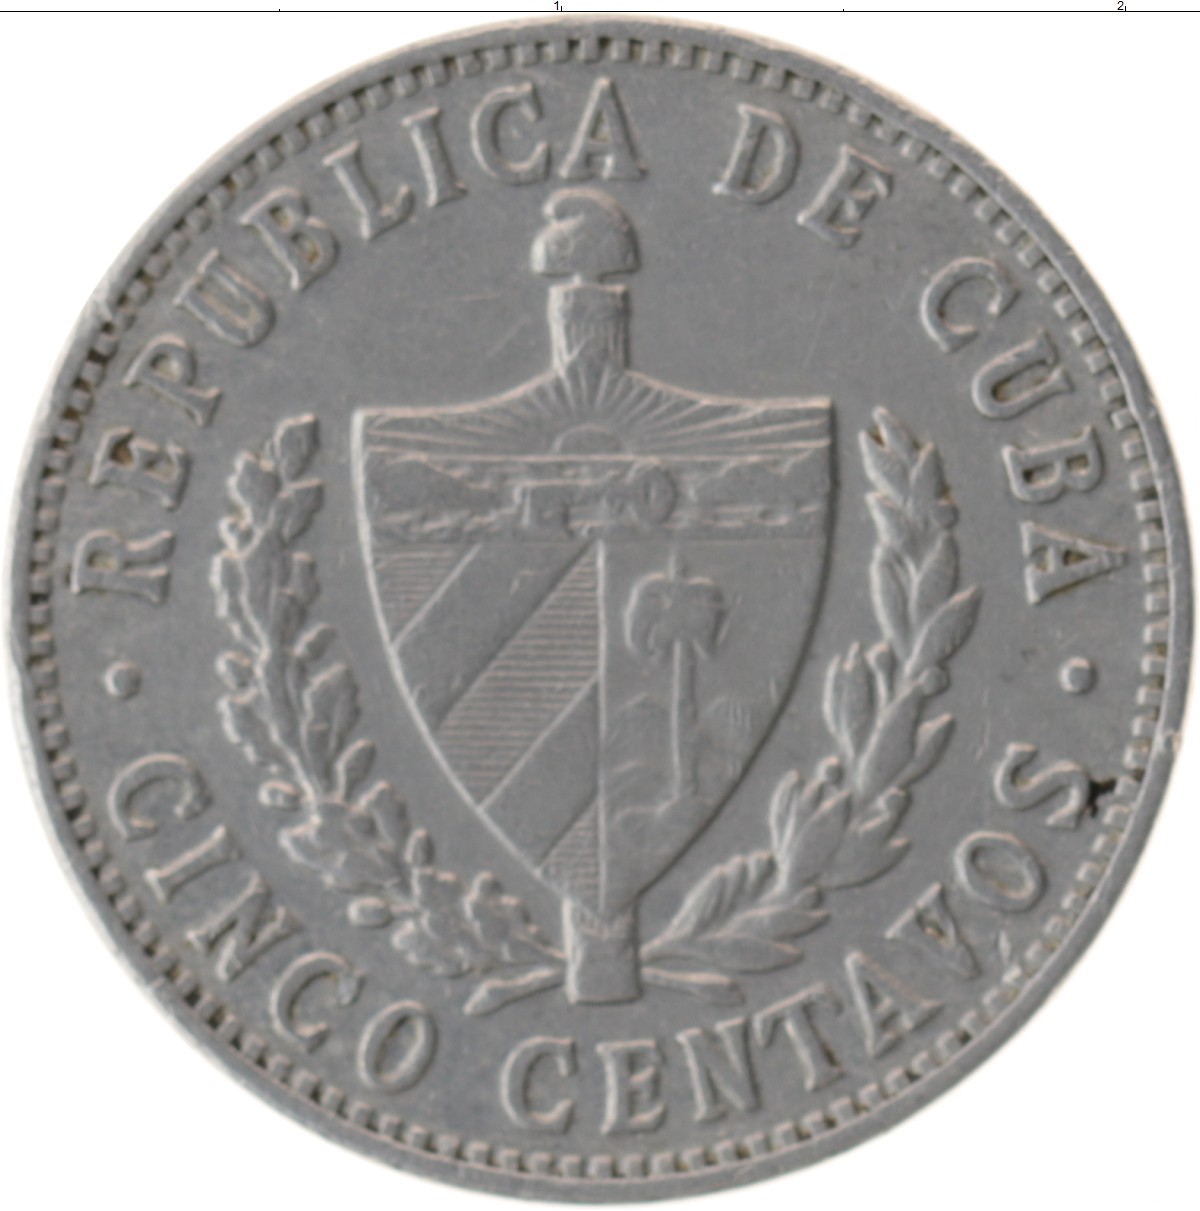 Кубинская монета. Монета Куба 5 сентаво. Монета 5 centavos. 20 Сентавос 1968. Кубинский монеты 1968г.